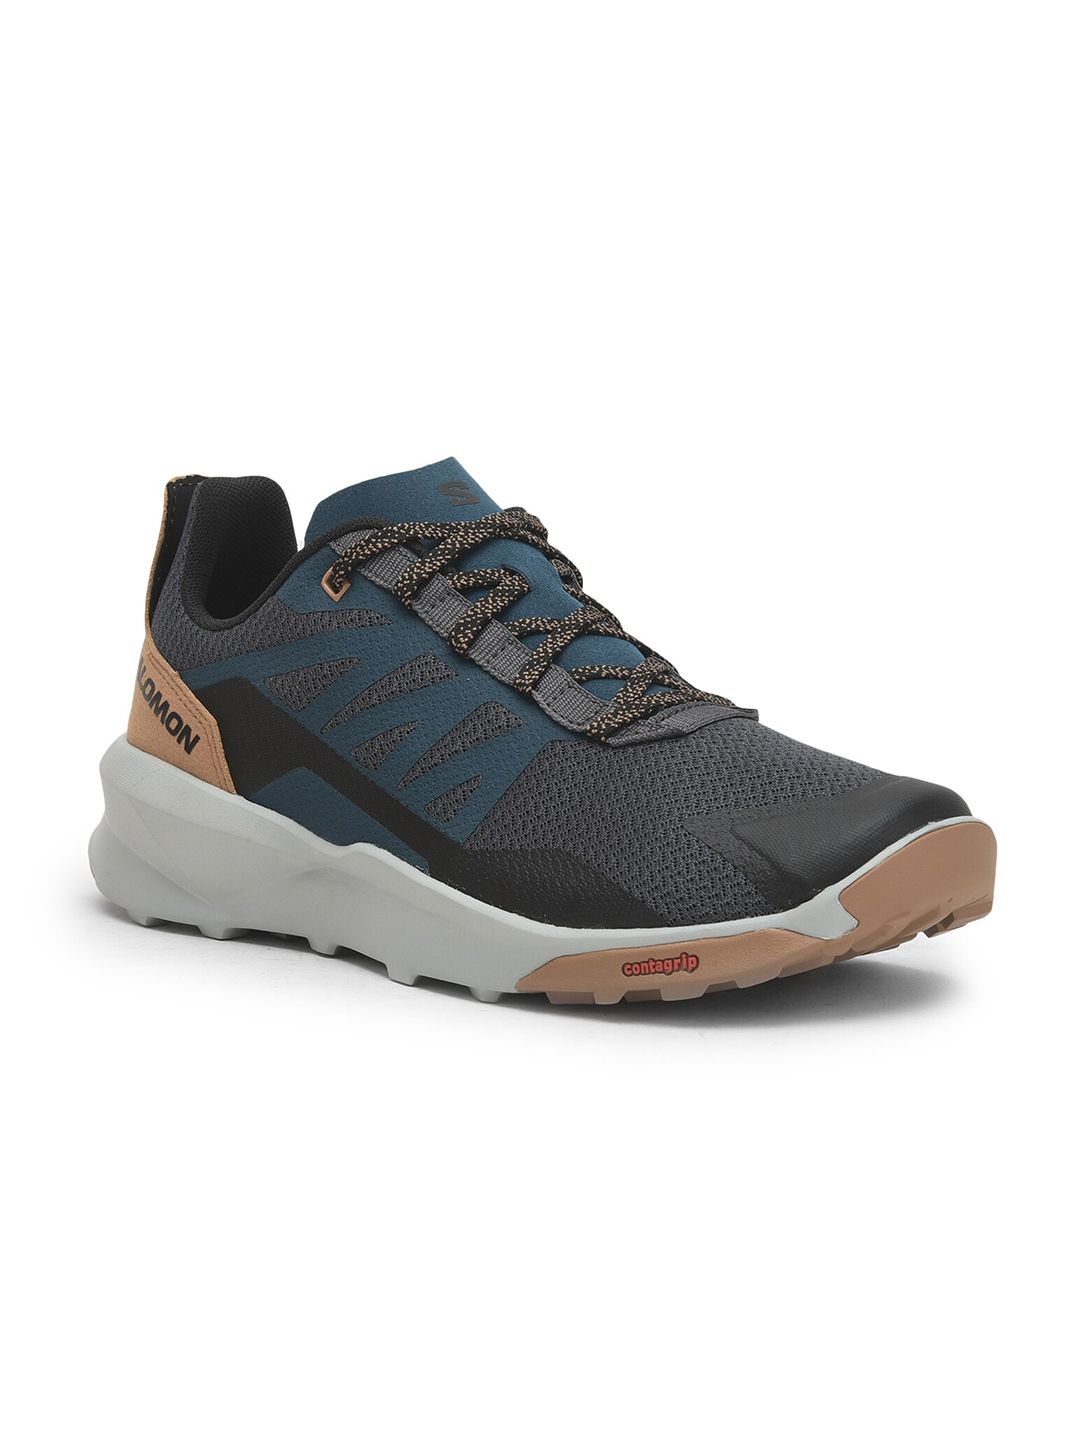 Salomon Men's XA Pro 3D v8 Trail Grey Running Shoes